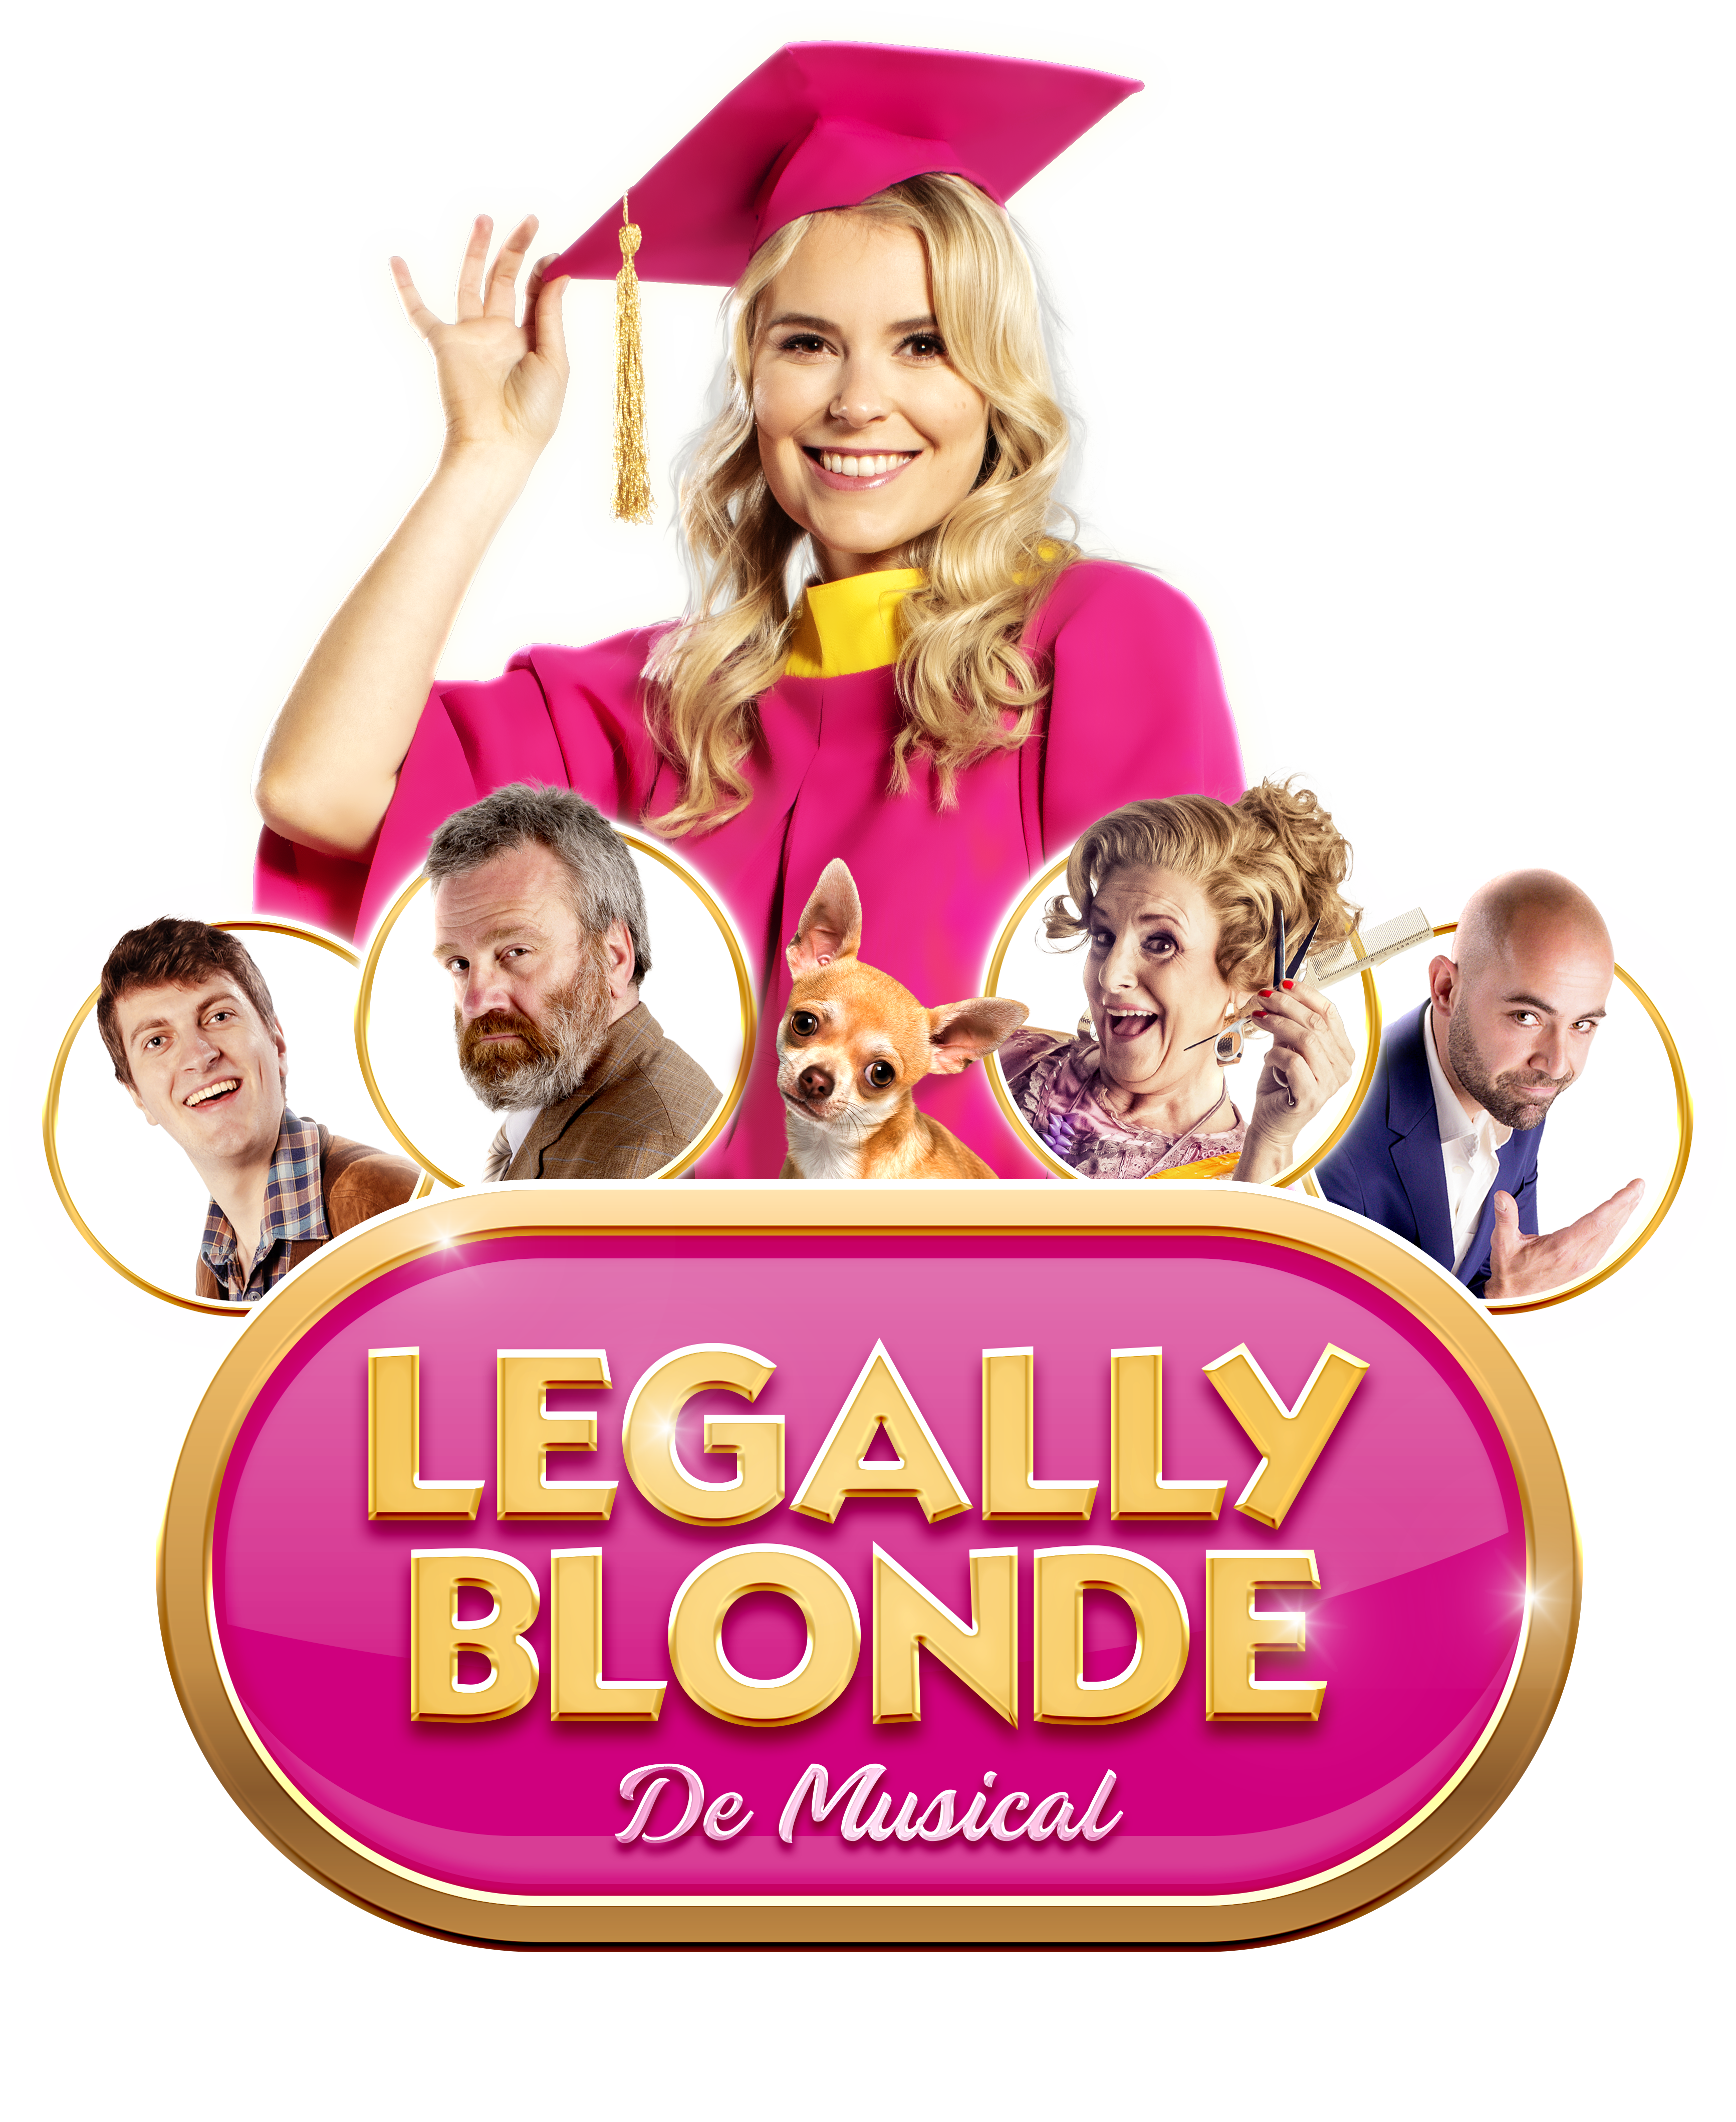 Legally blonde